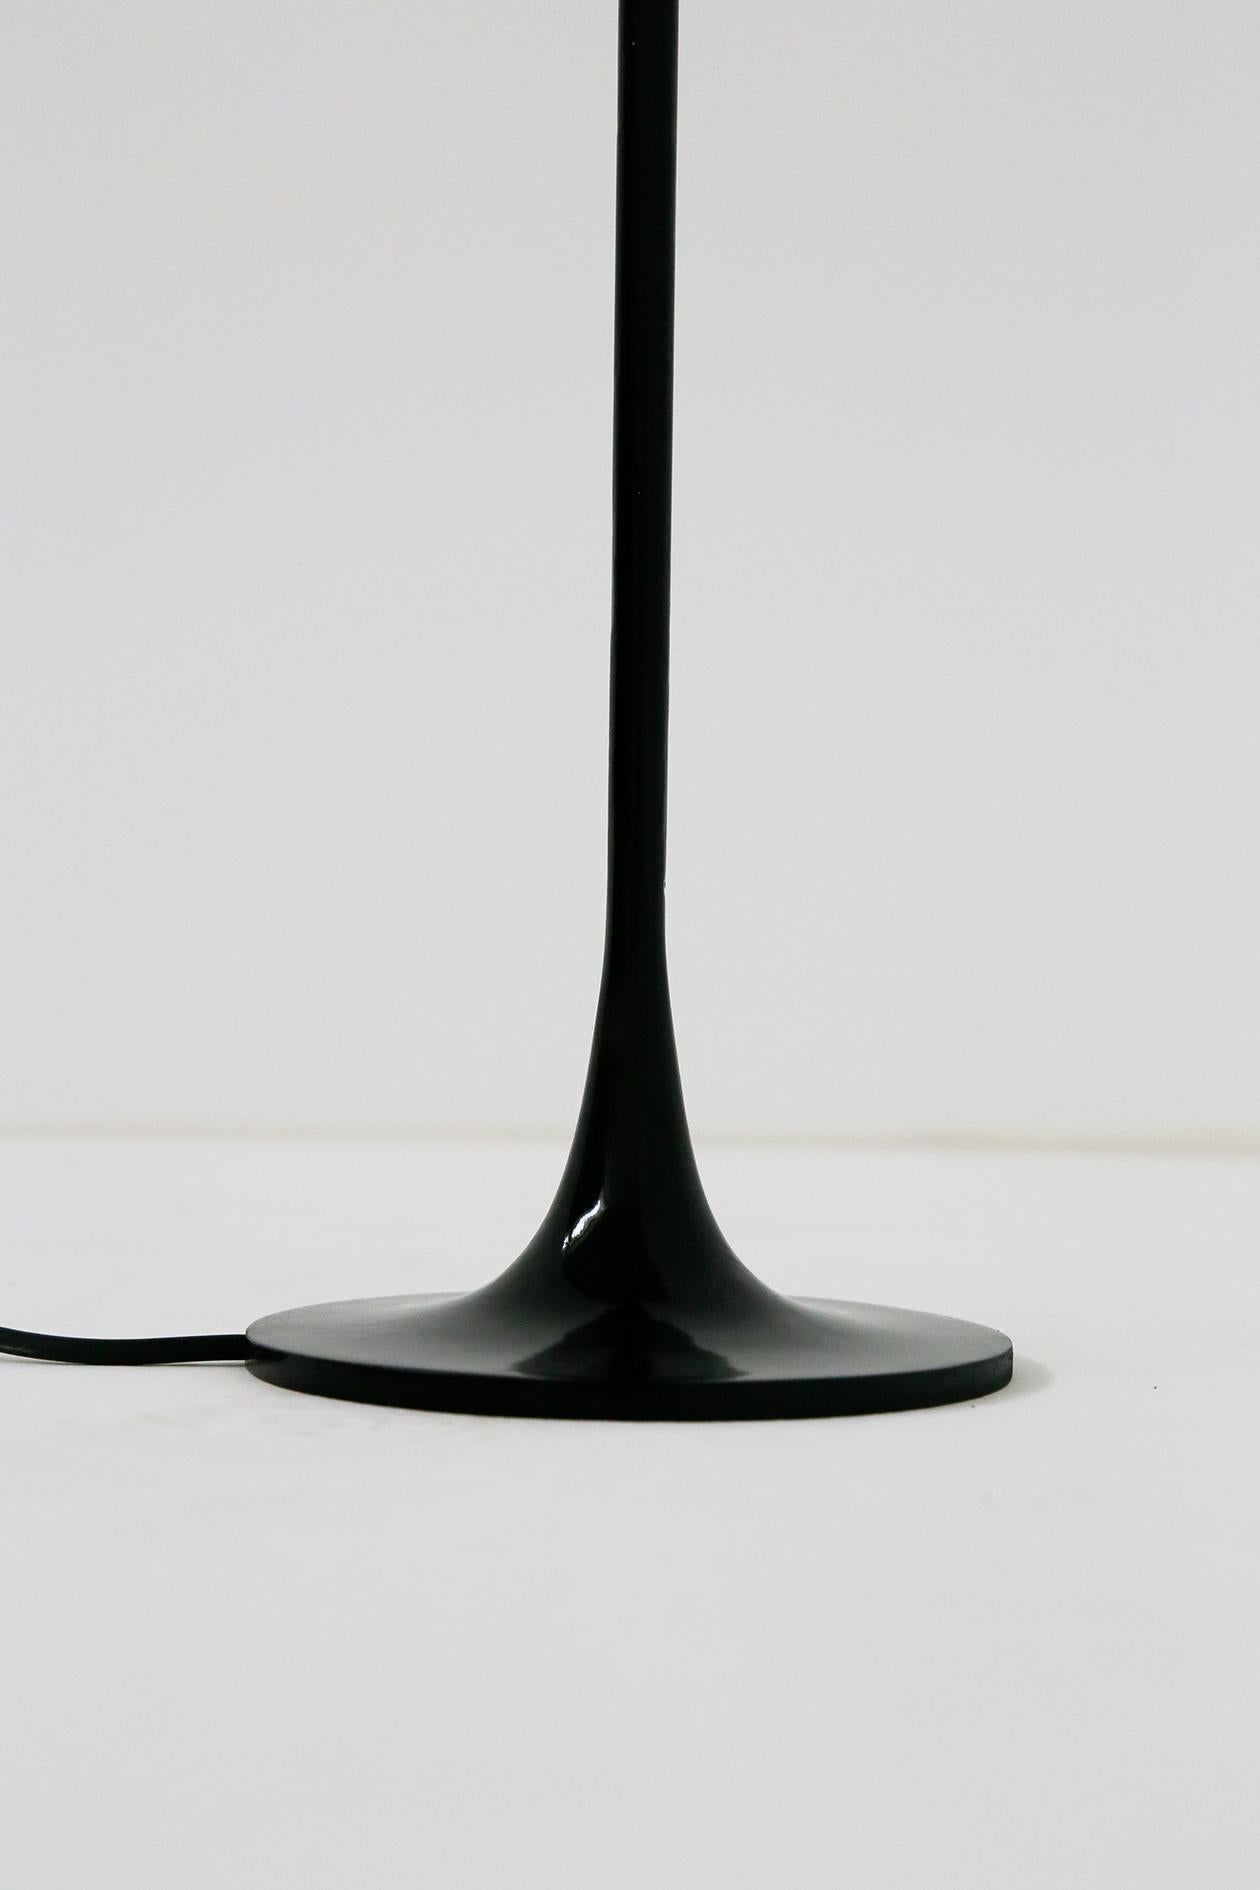 Gino Sarfatti Midcentury Black Floor Lamp for Arteluce, Model No. 1086, 1961 2